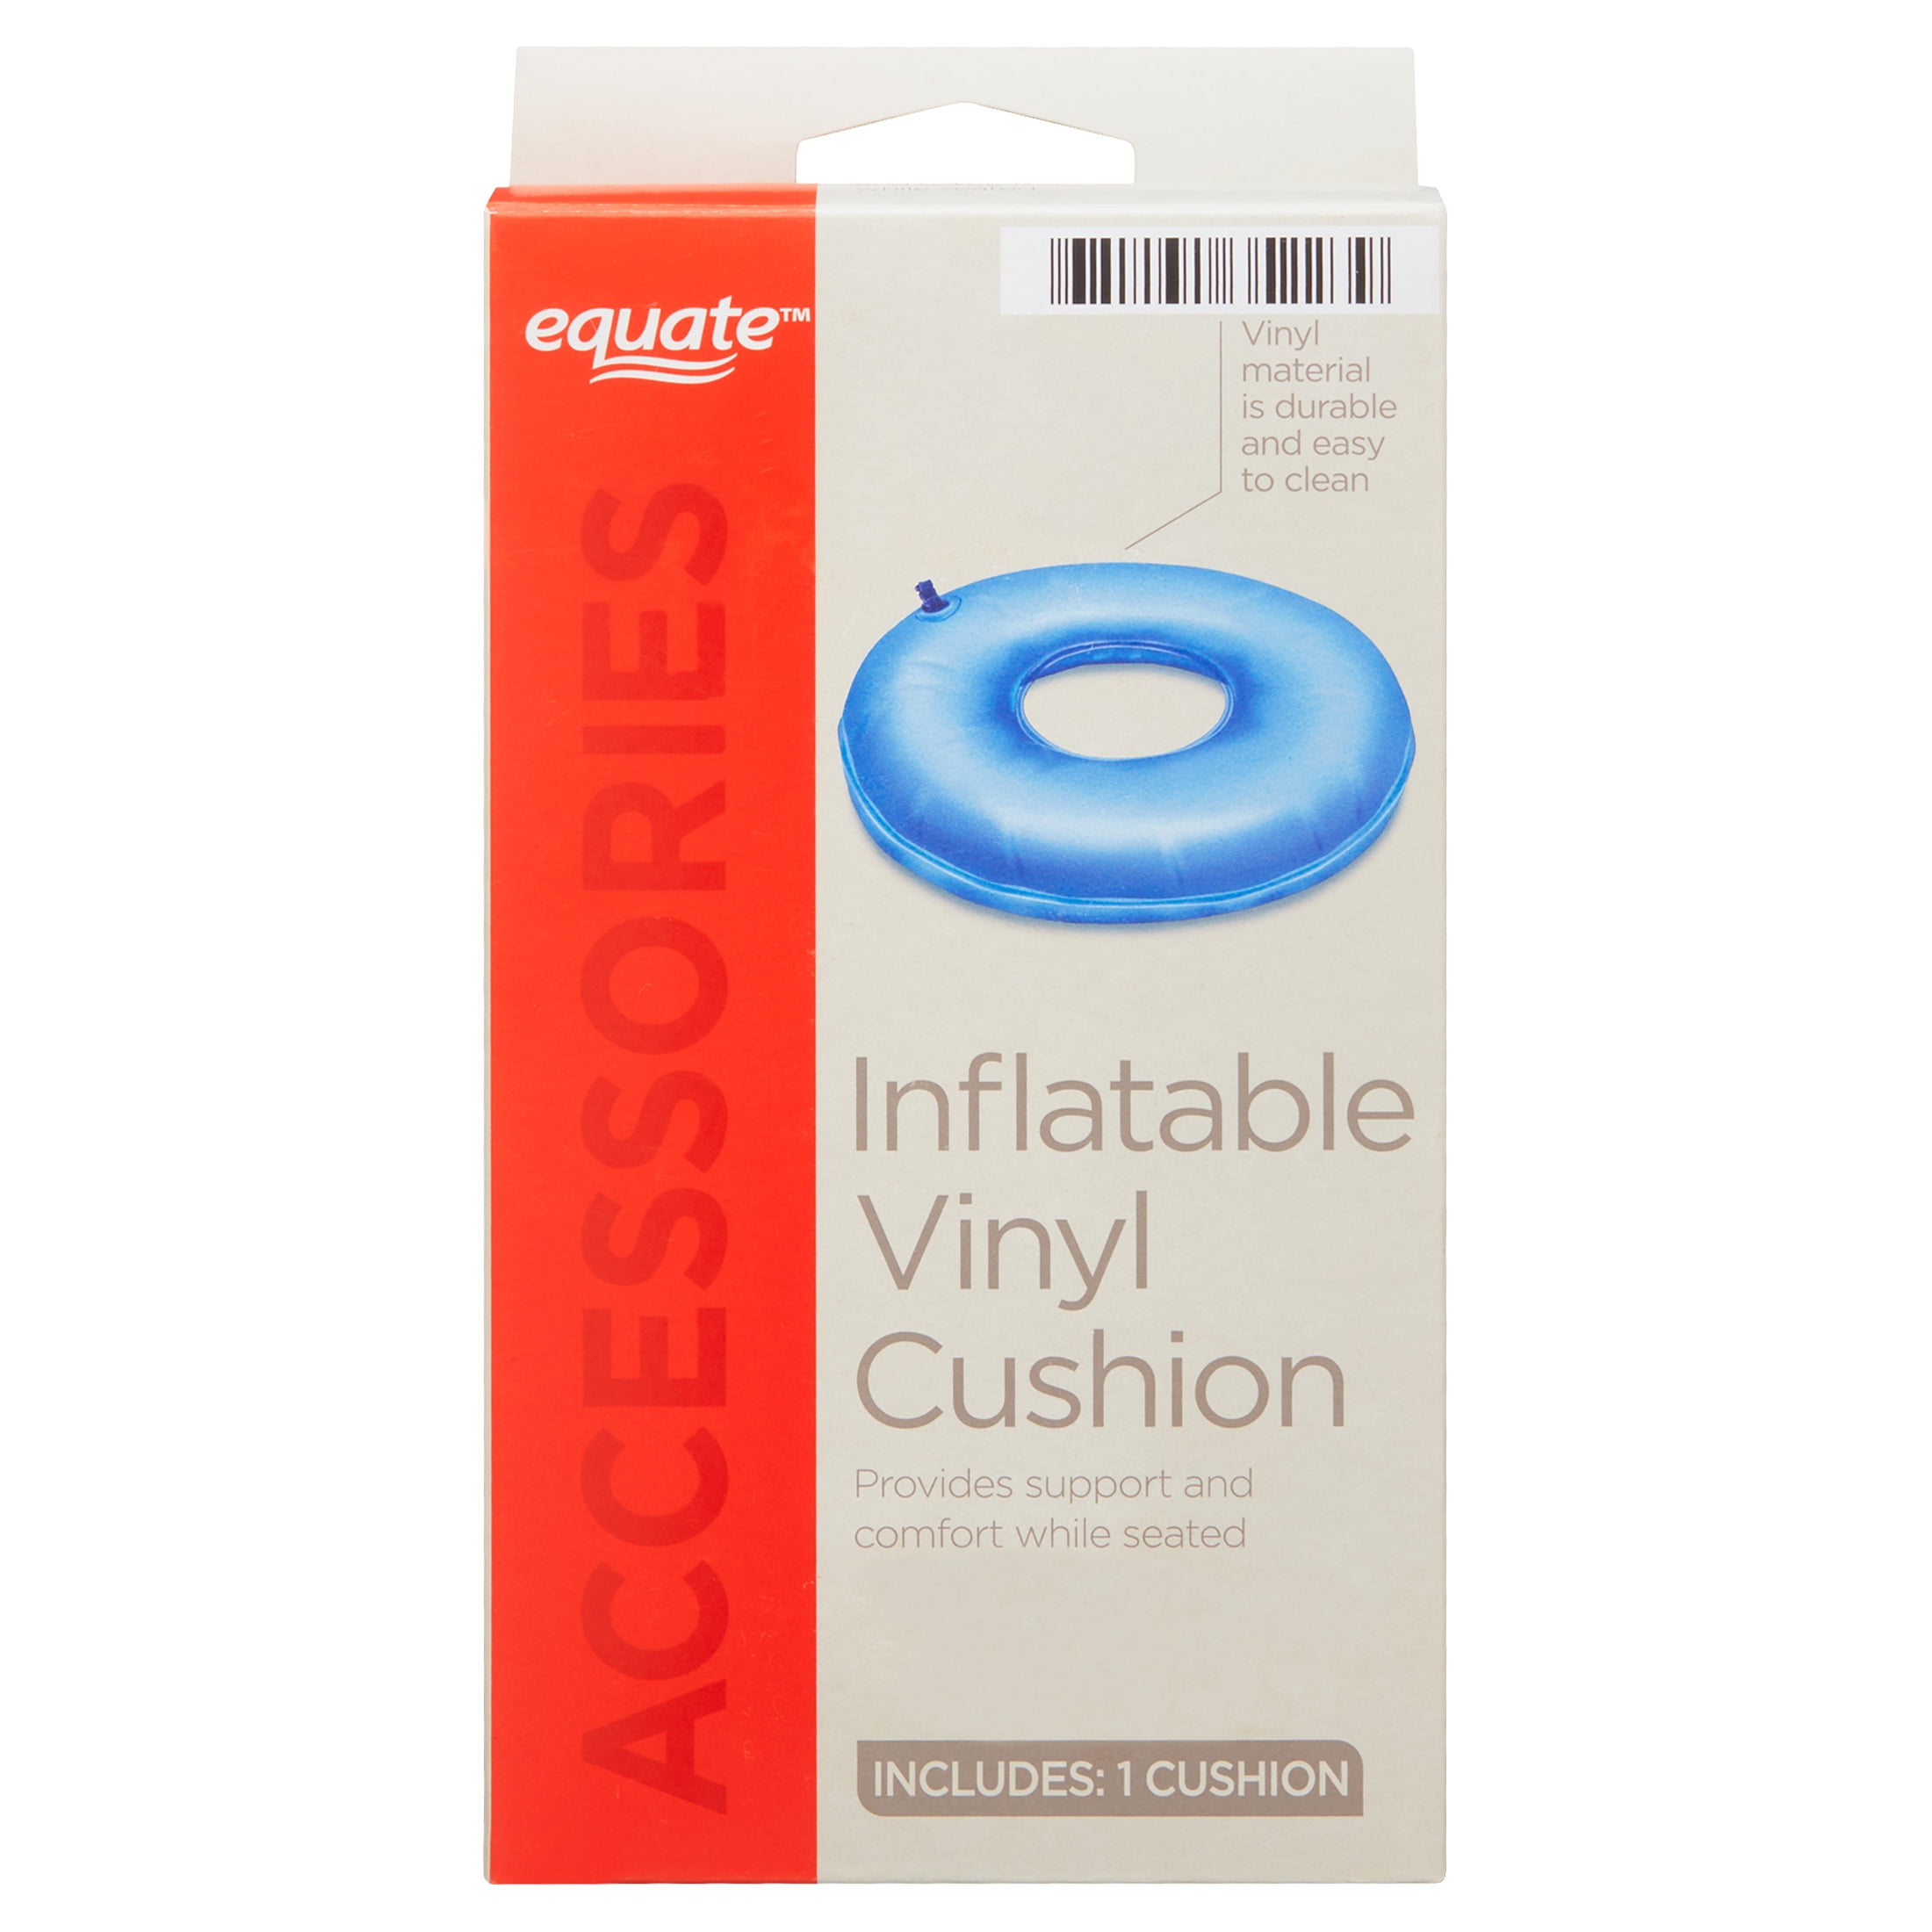 Equate Inflatable Vinyl Cushion, Blue, Universal